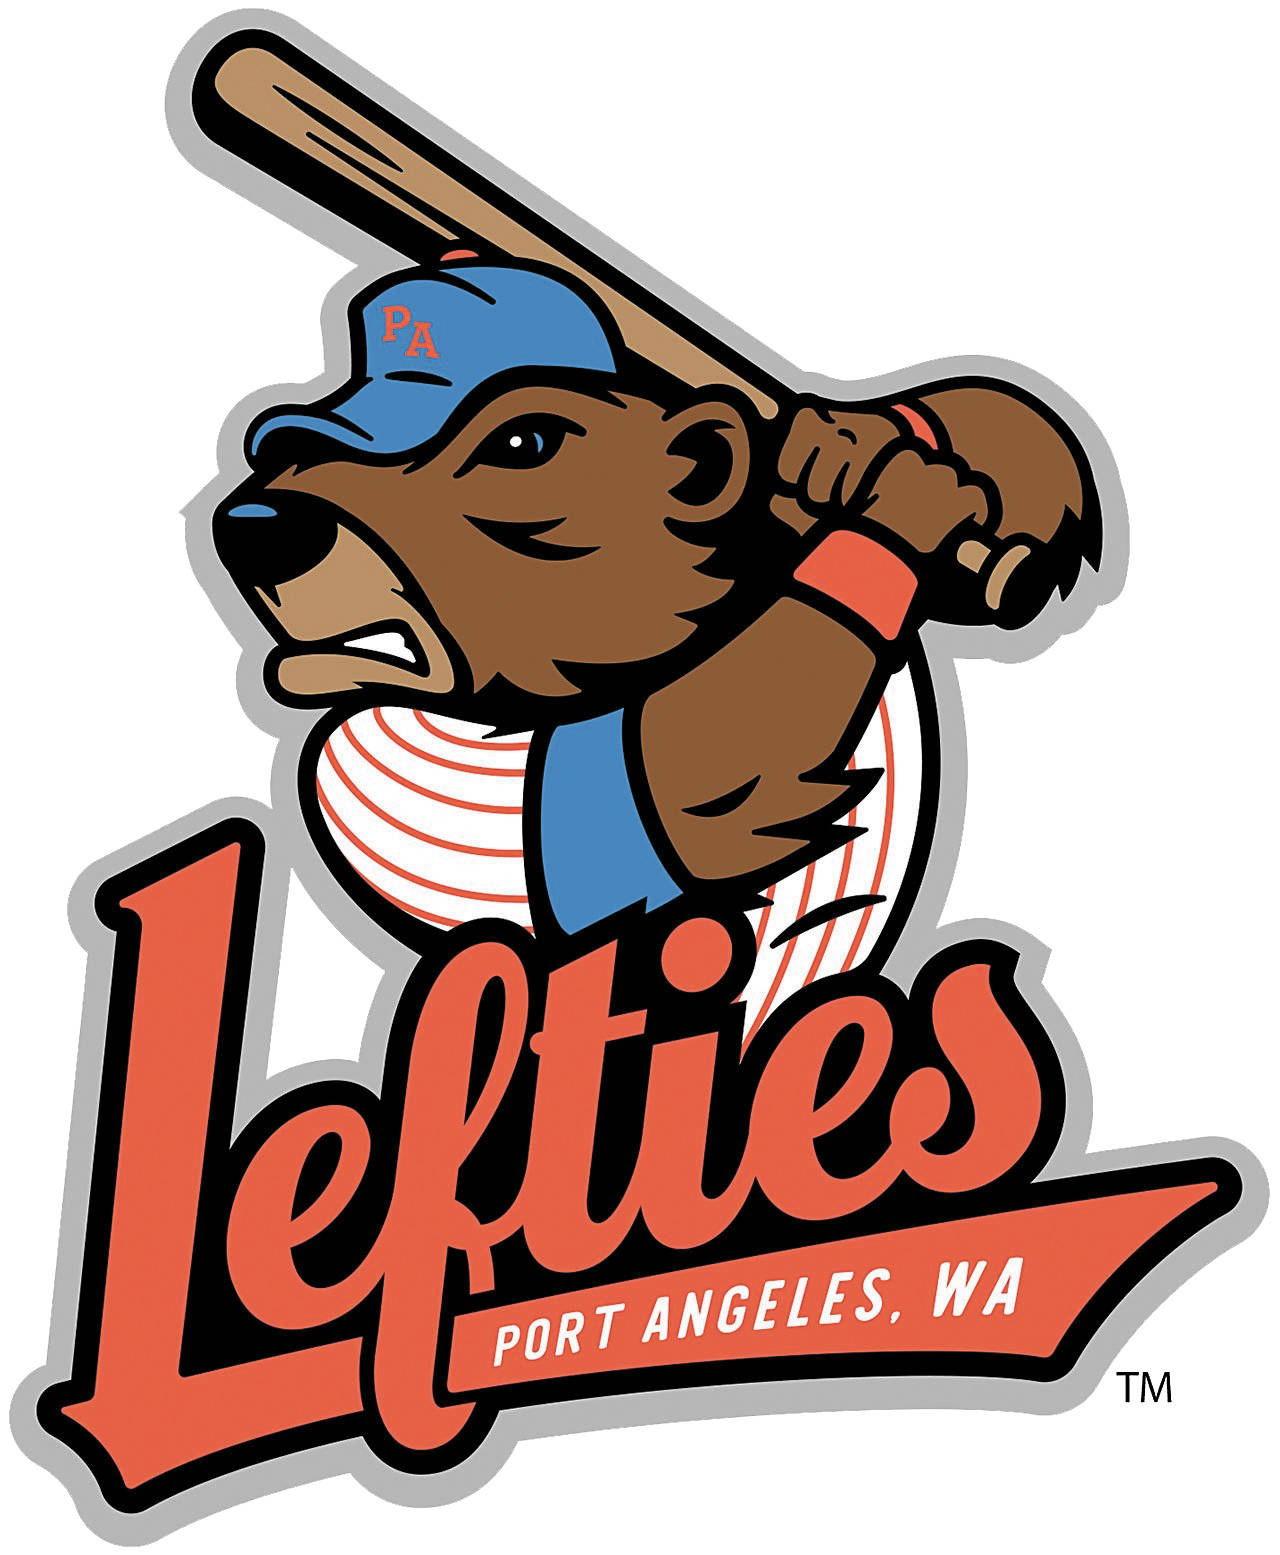 BASEBALL: Lefties tag Elks for 16 runs in big win